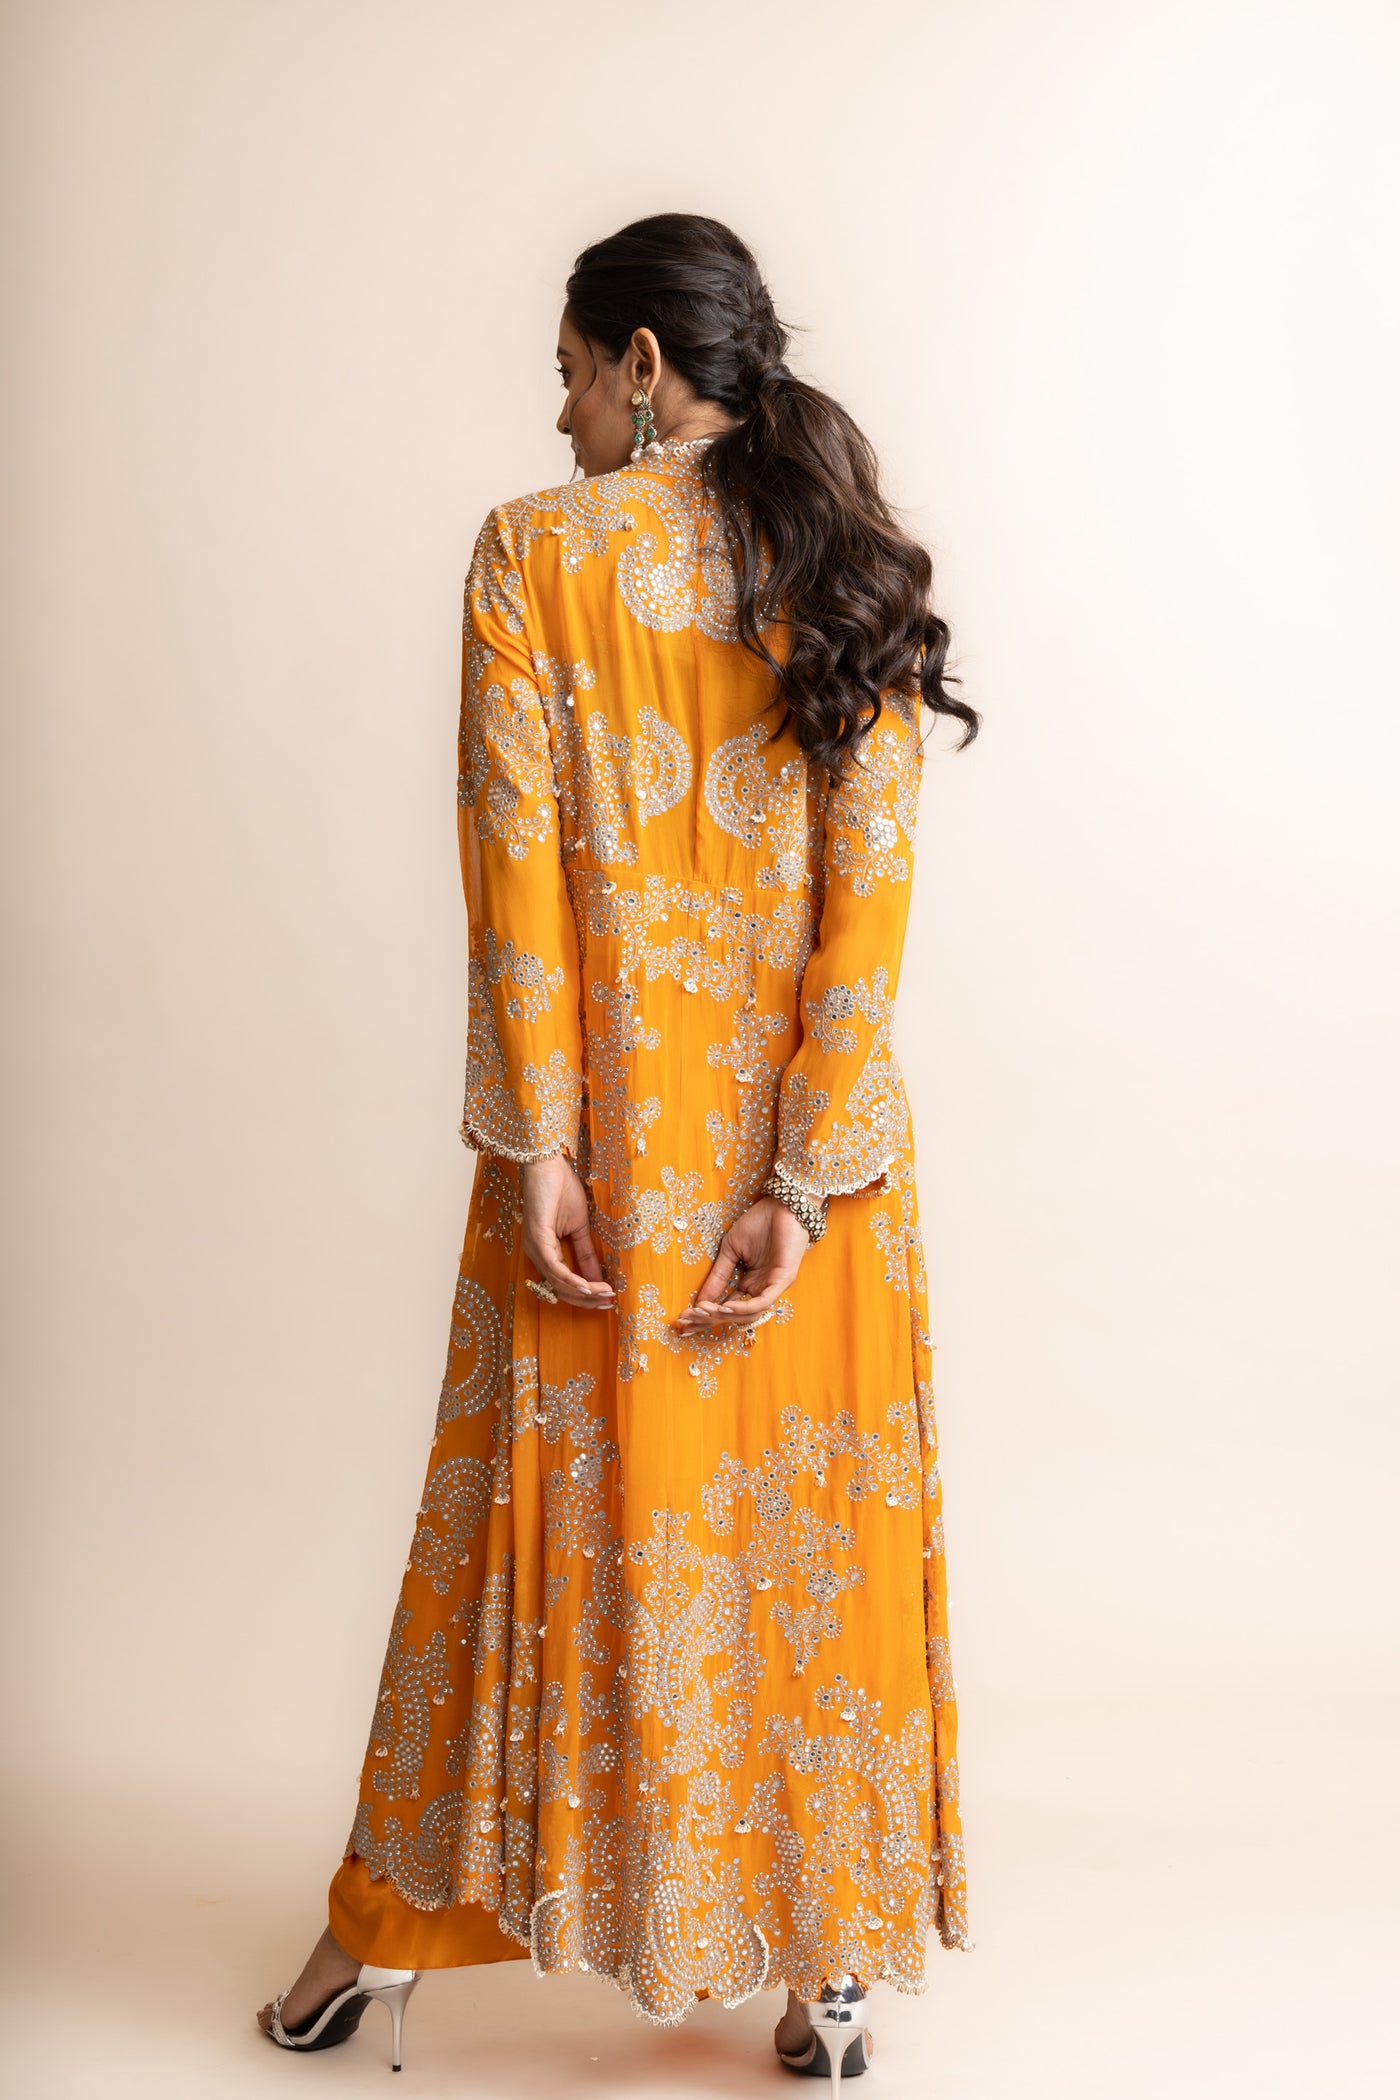 Nupur Kanoi Jacket And Skirt Set indian designer wear online shopping melange singapore